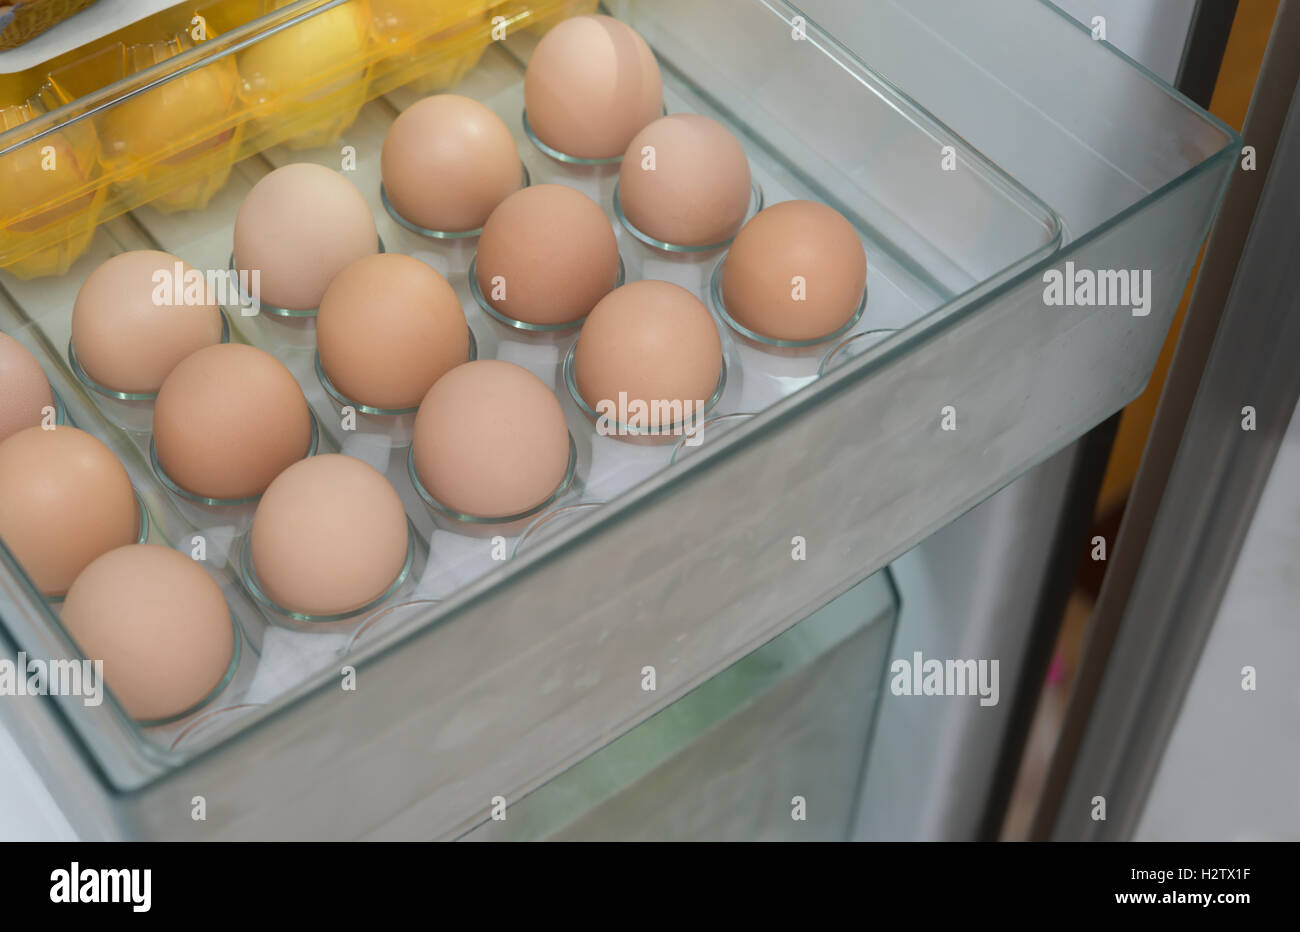 fresh eggs in a shelf of refrigerator Stock Photo